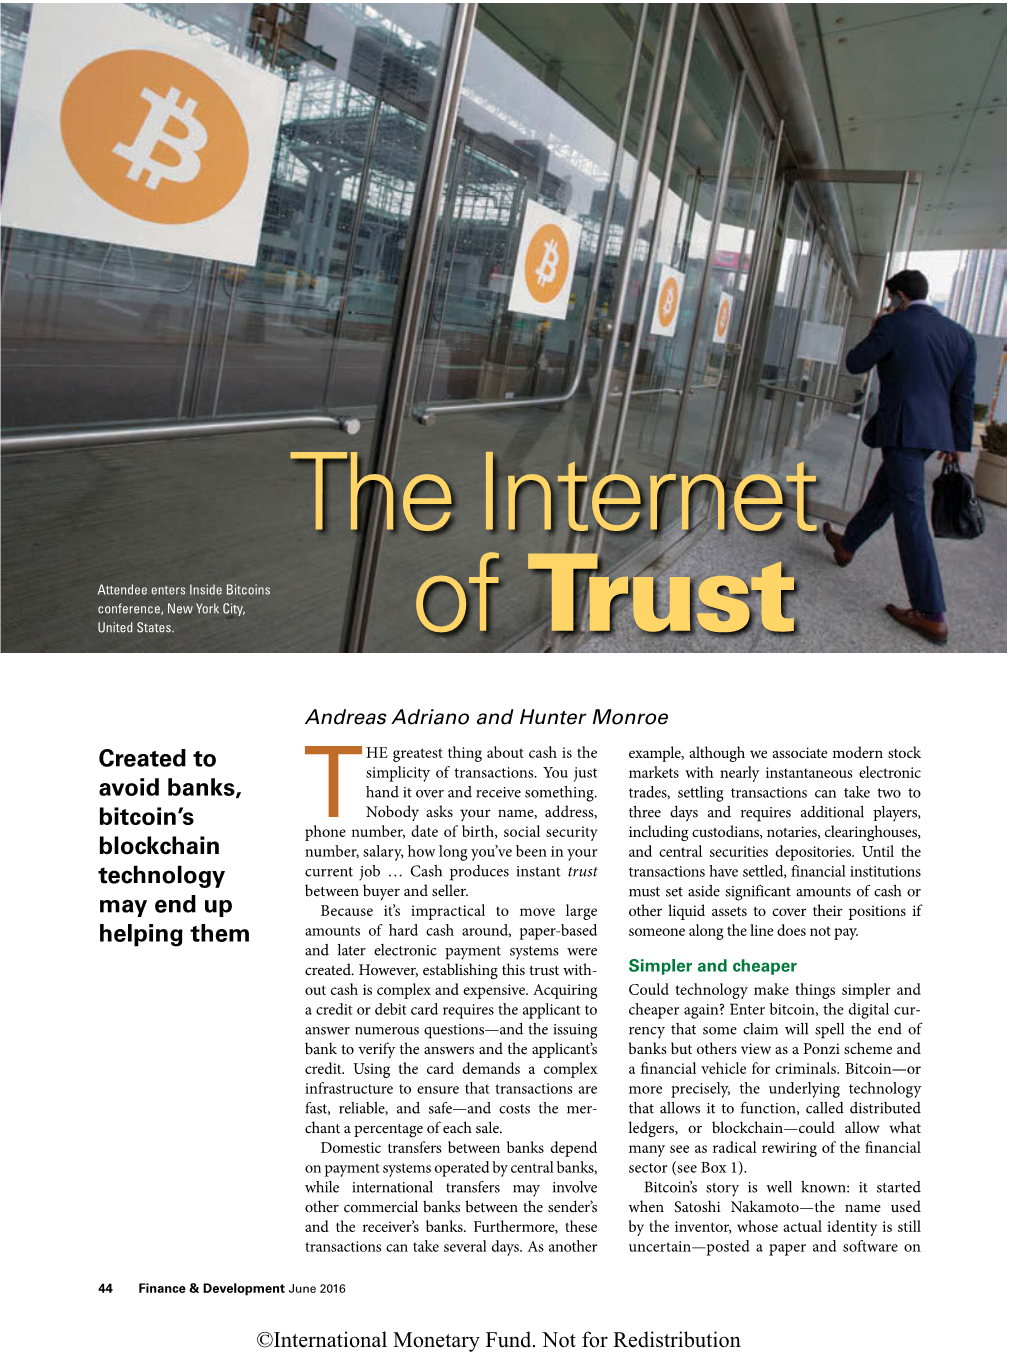 The Internet of Trust